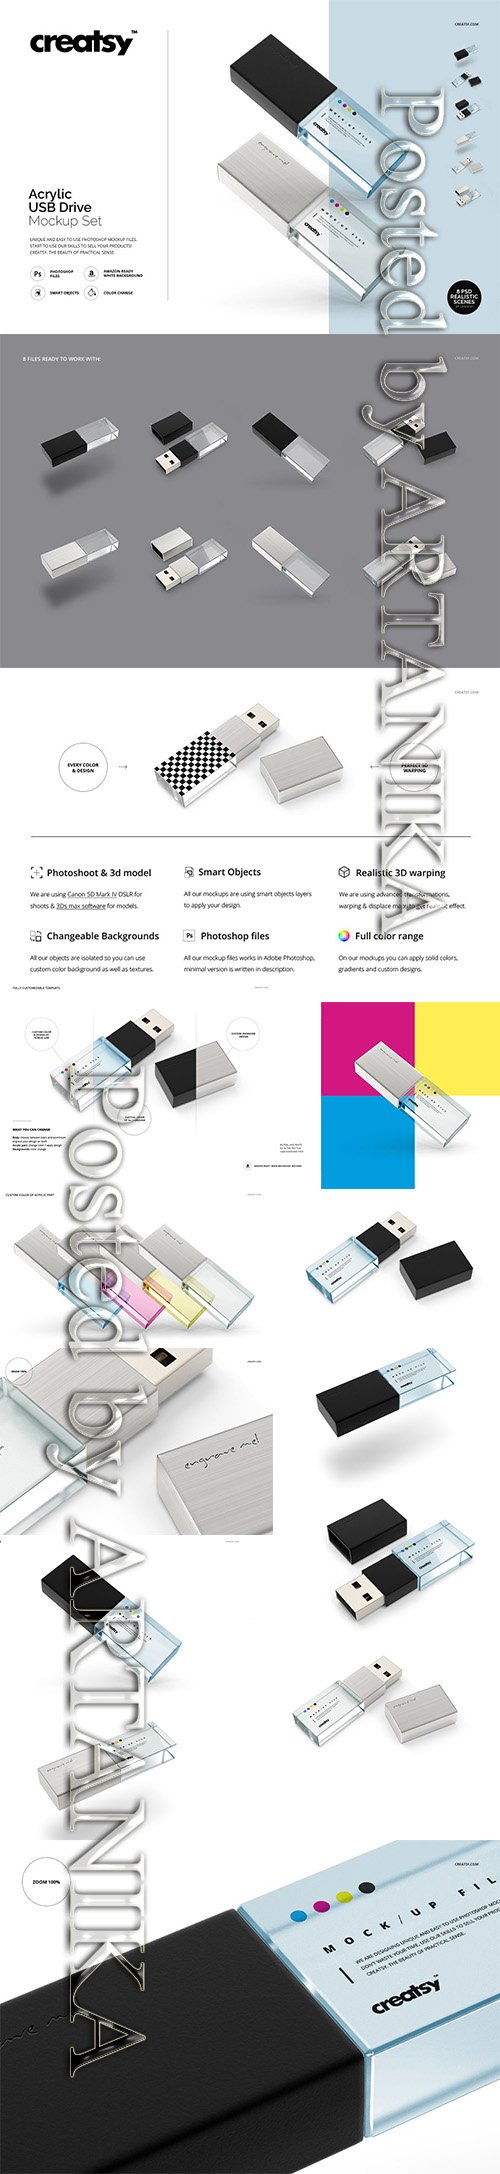 CreativeMarket - Acrylic USB Drive Mockup Set 2288326